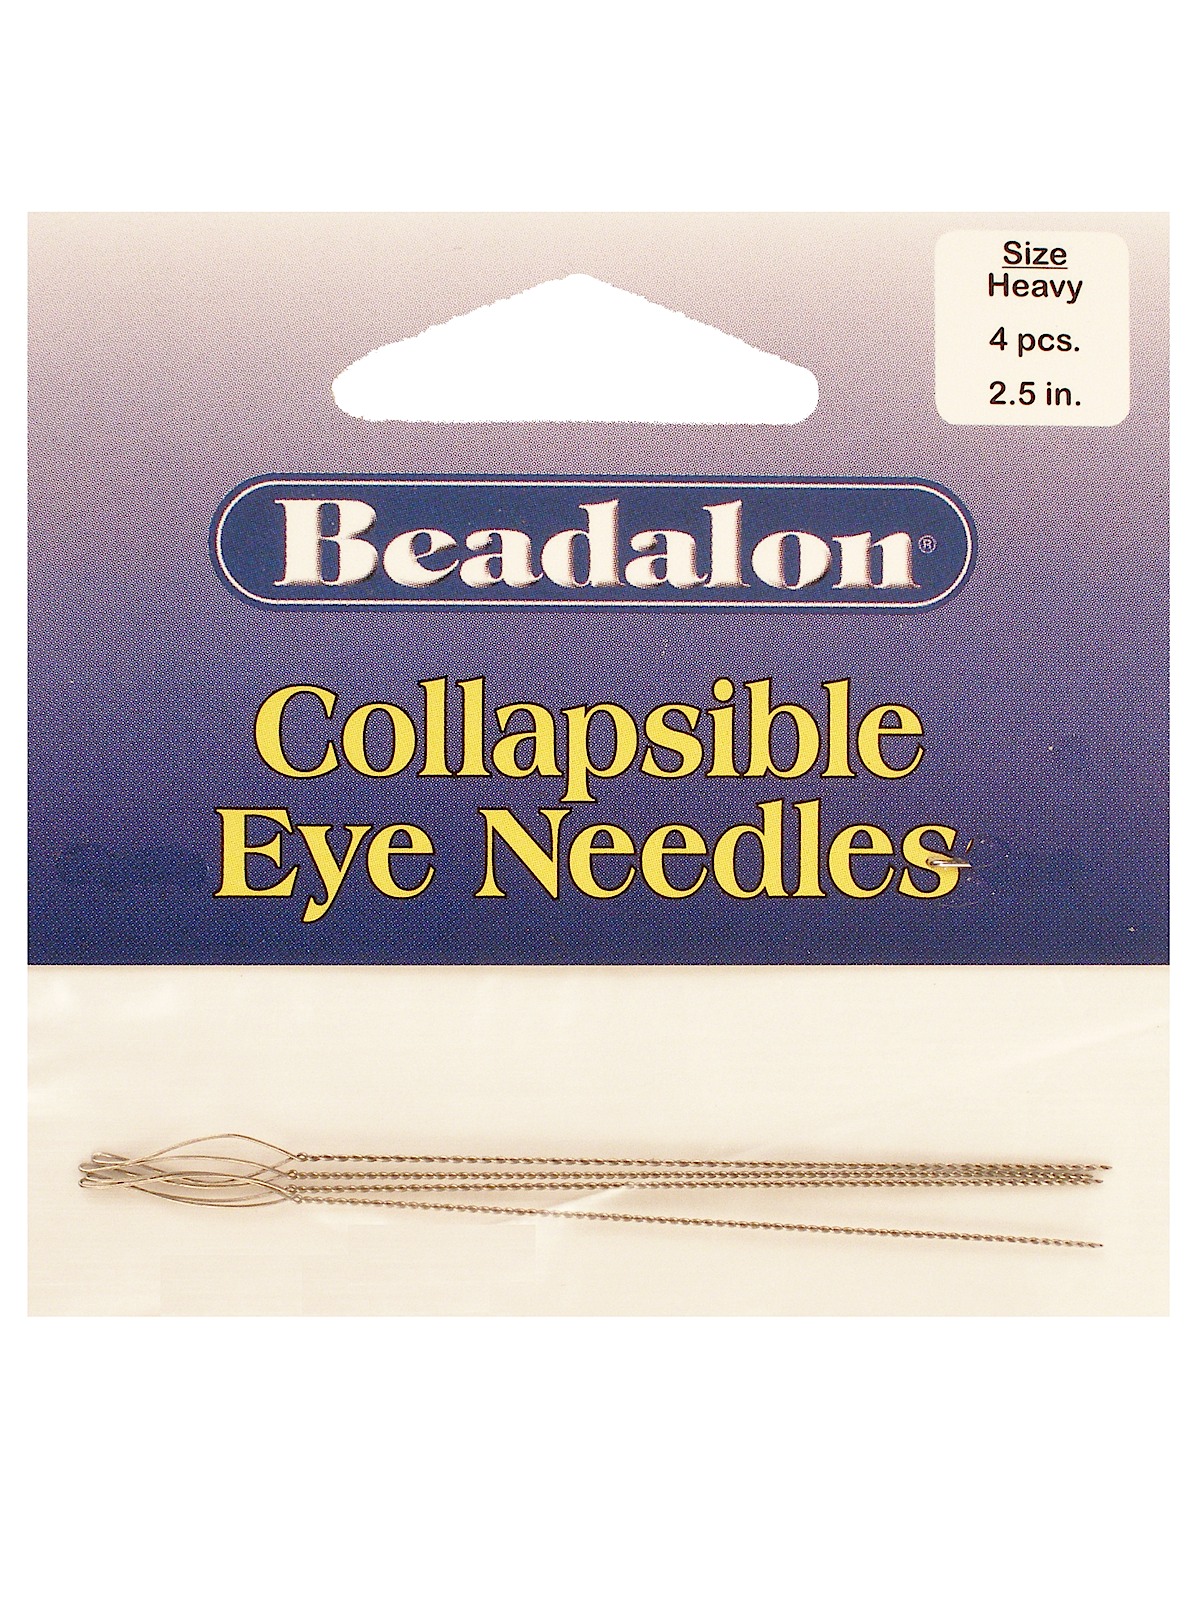 Where To Buy Beadalon Collapsible Eye Needles 86